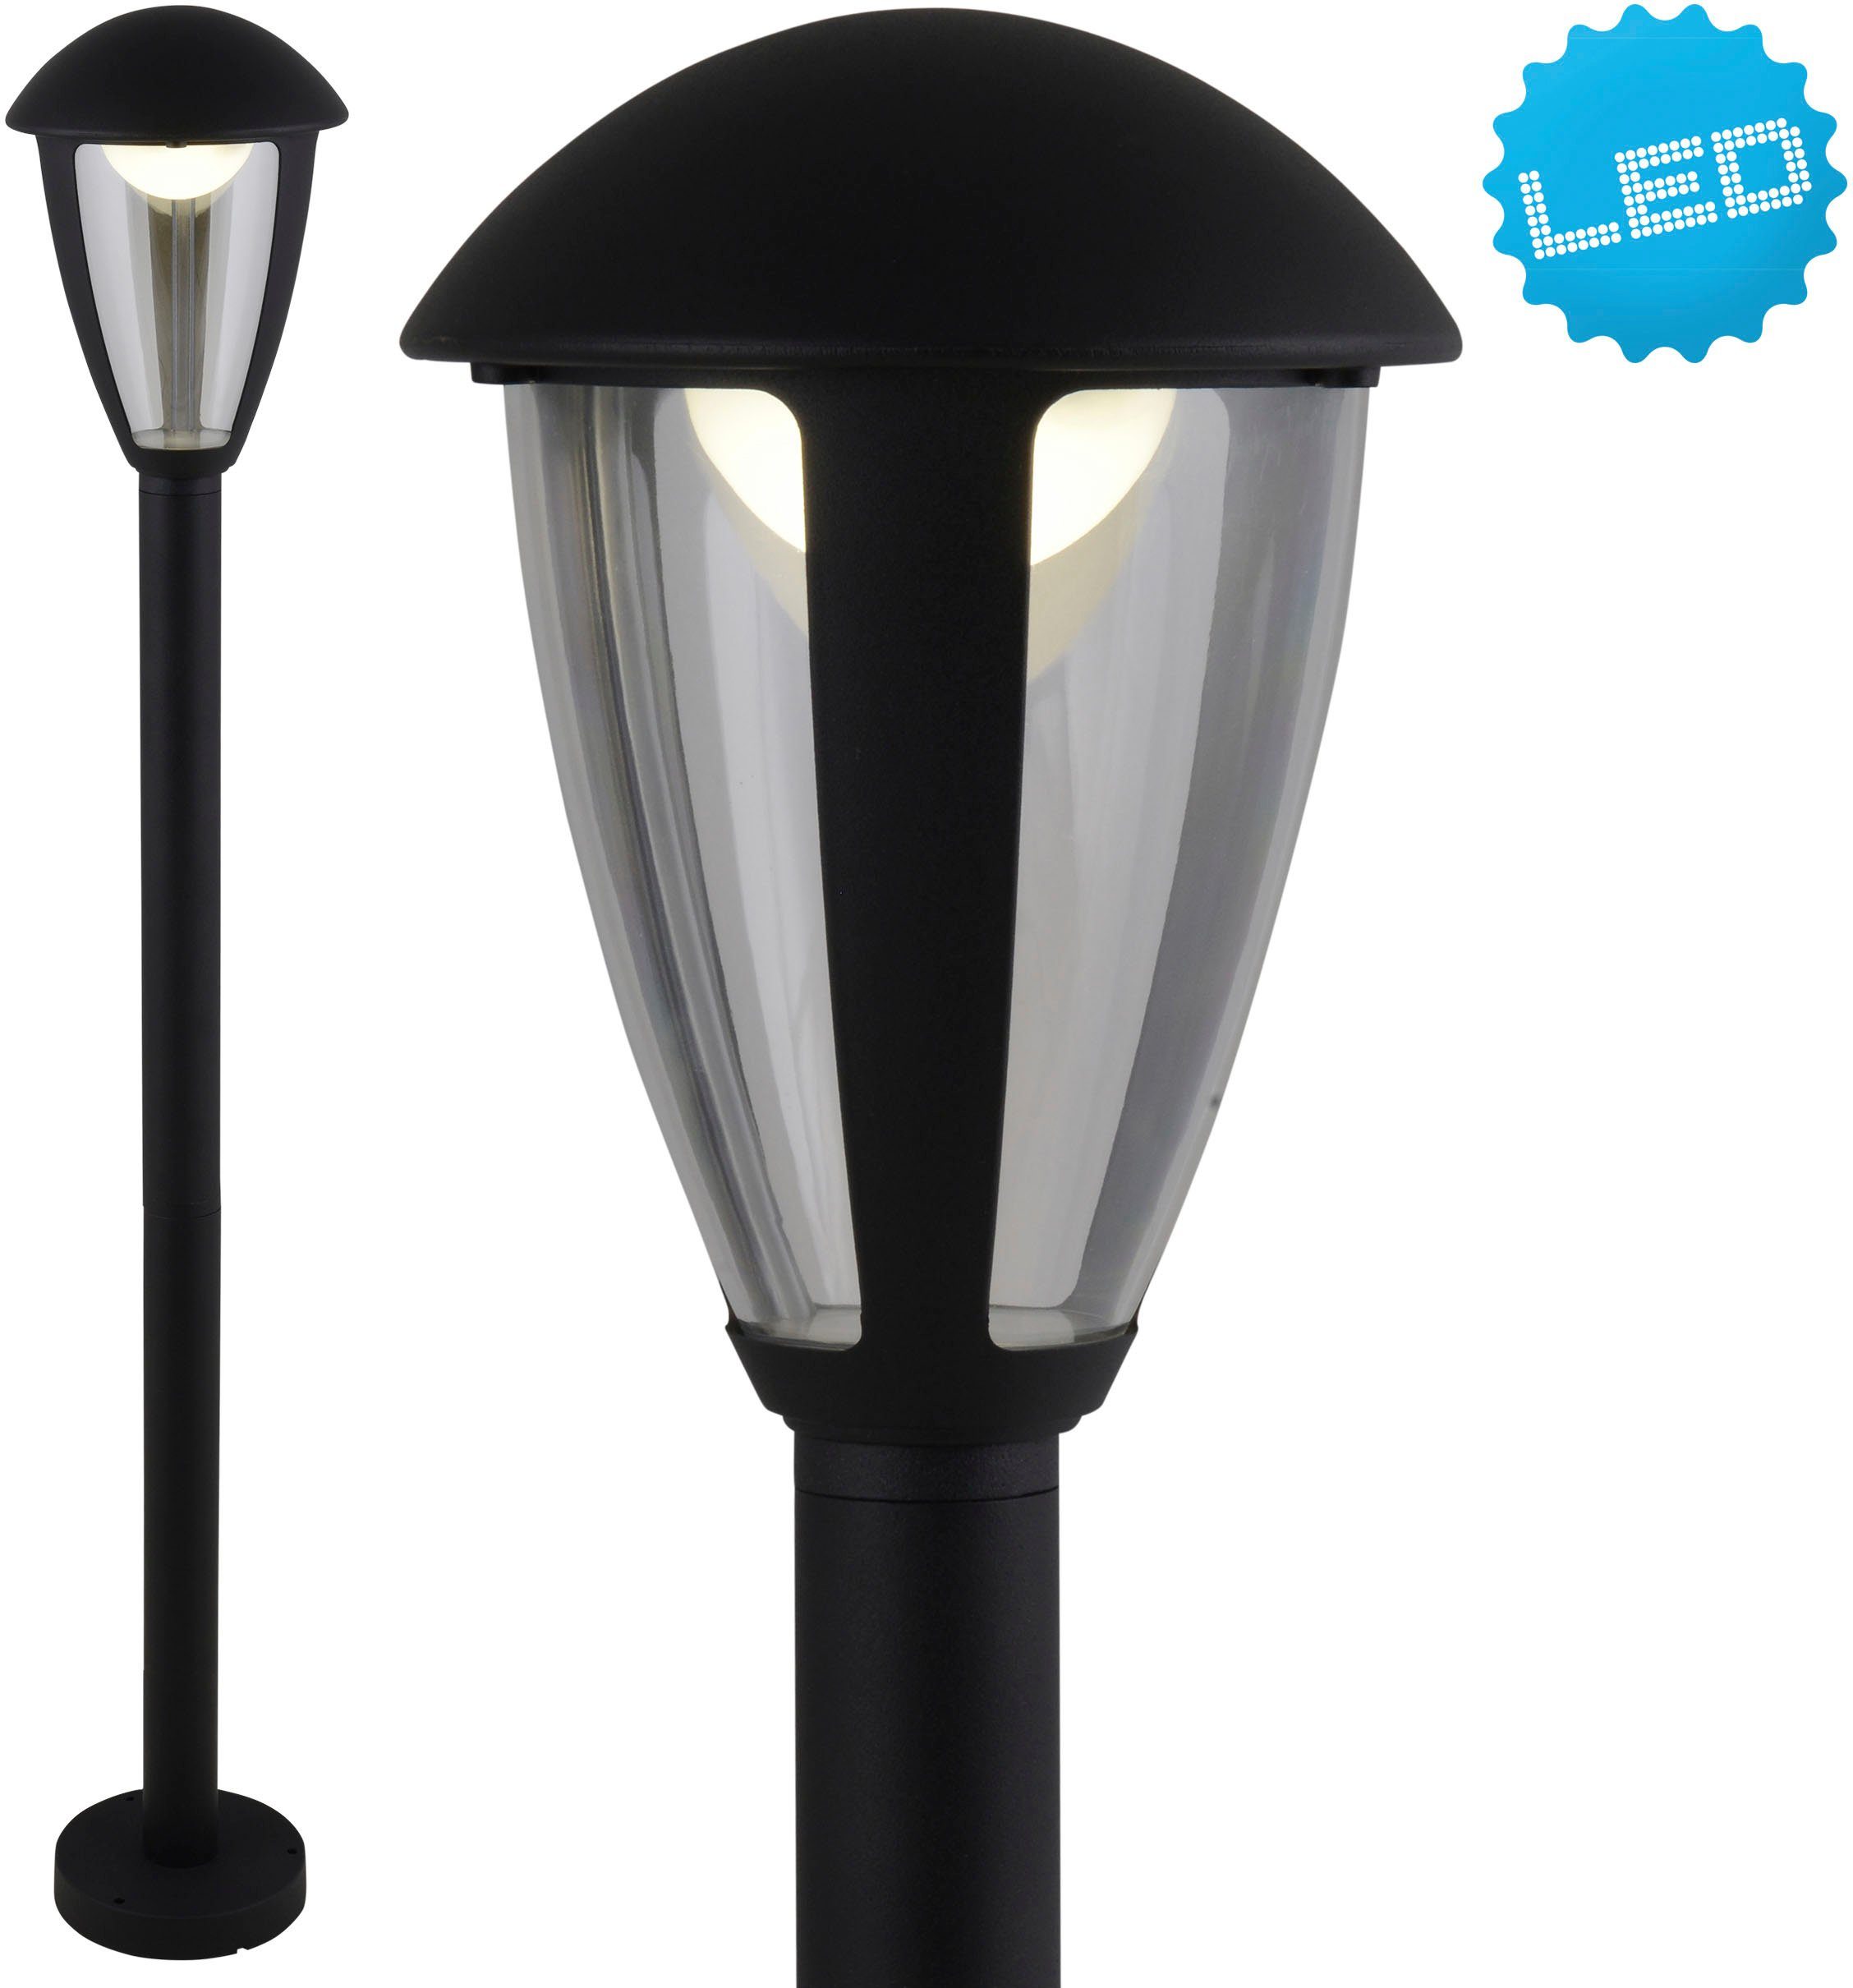 LED näve IP44 Aluminium schwarz 100cm klar LED incl. Außen-Stehlampe Kunststoff Höhe Clint, 14x Warmweiß,